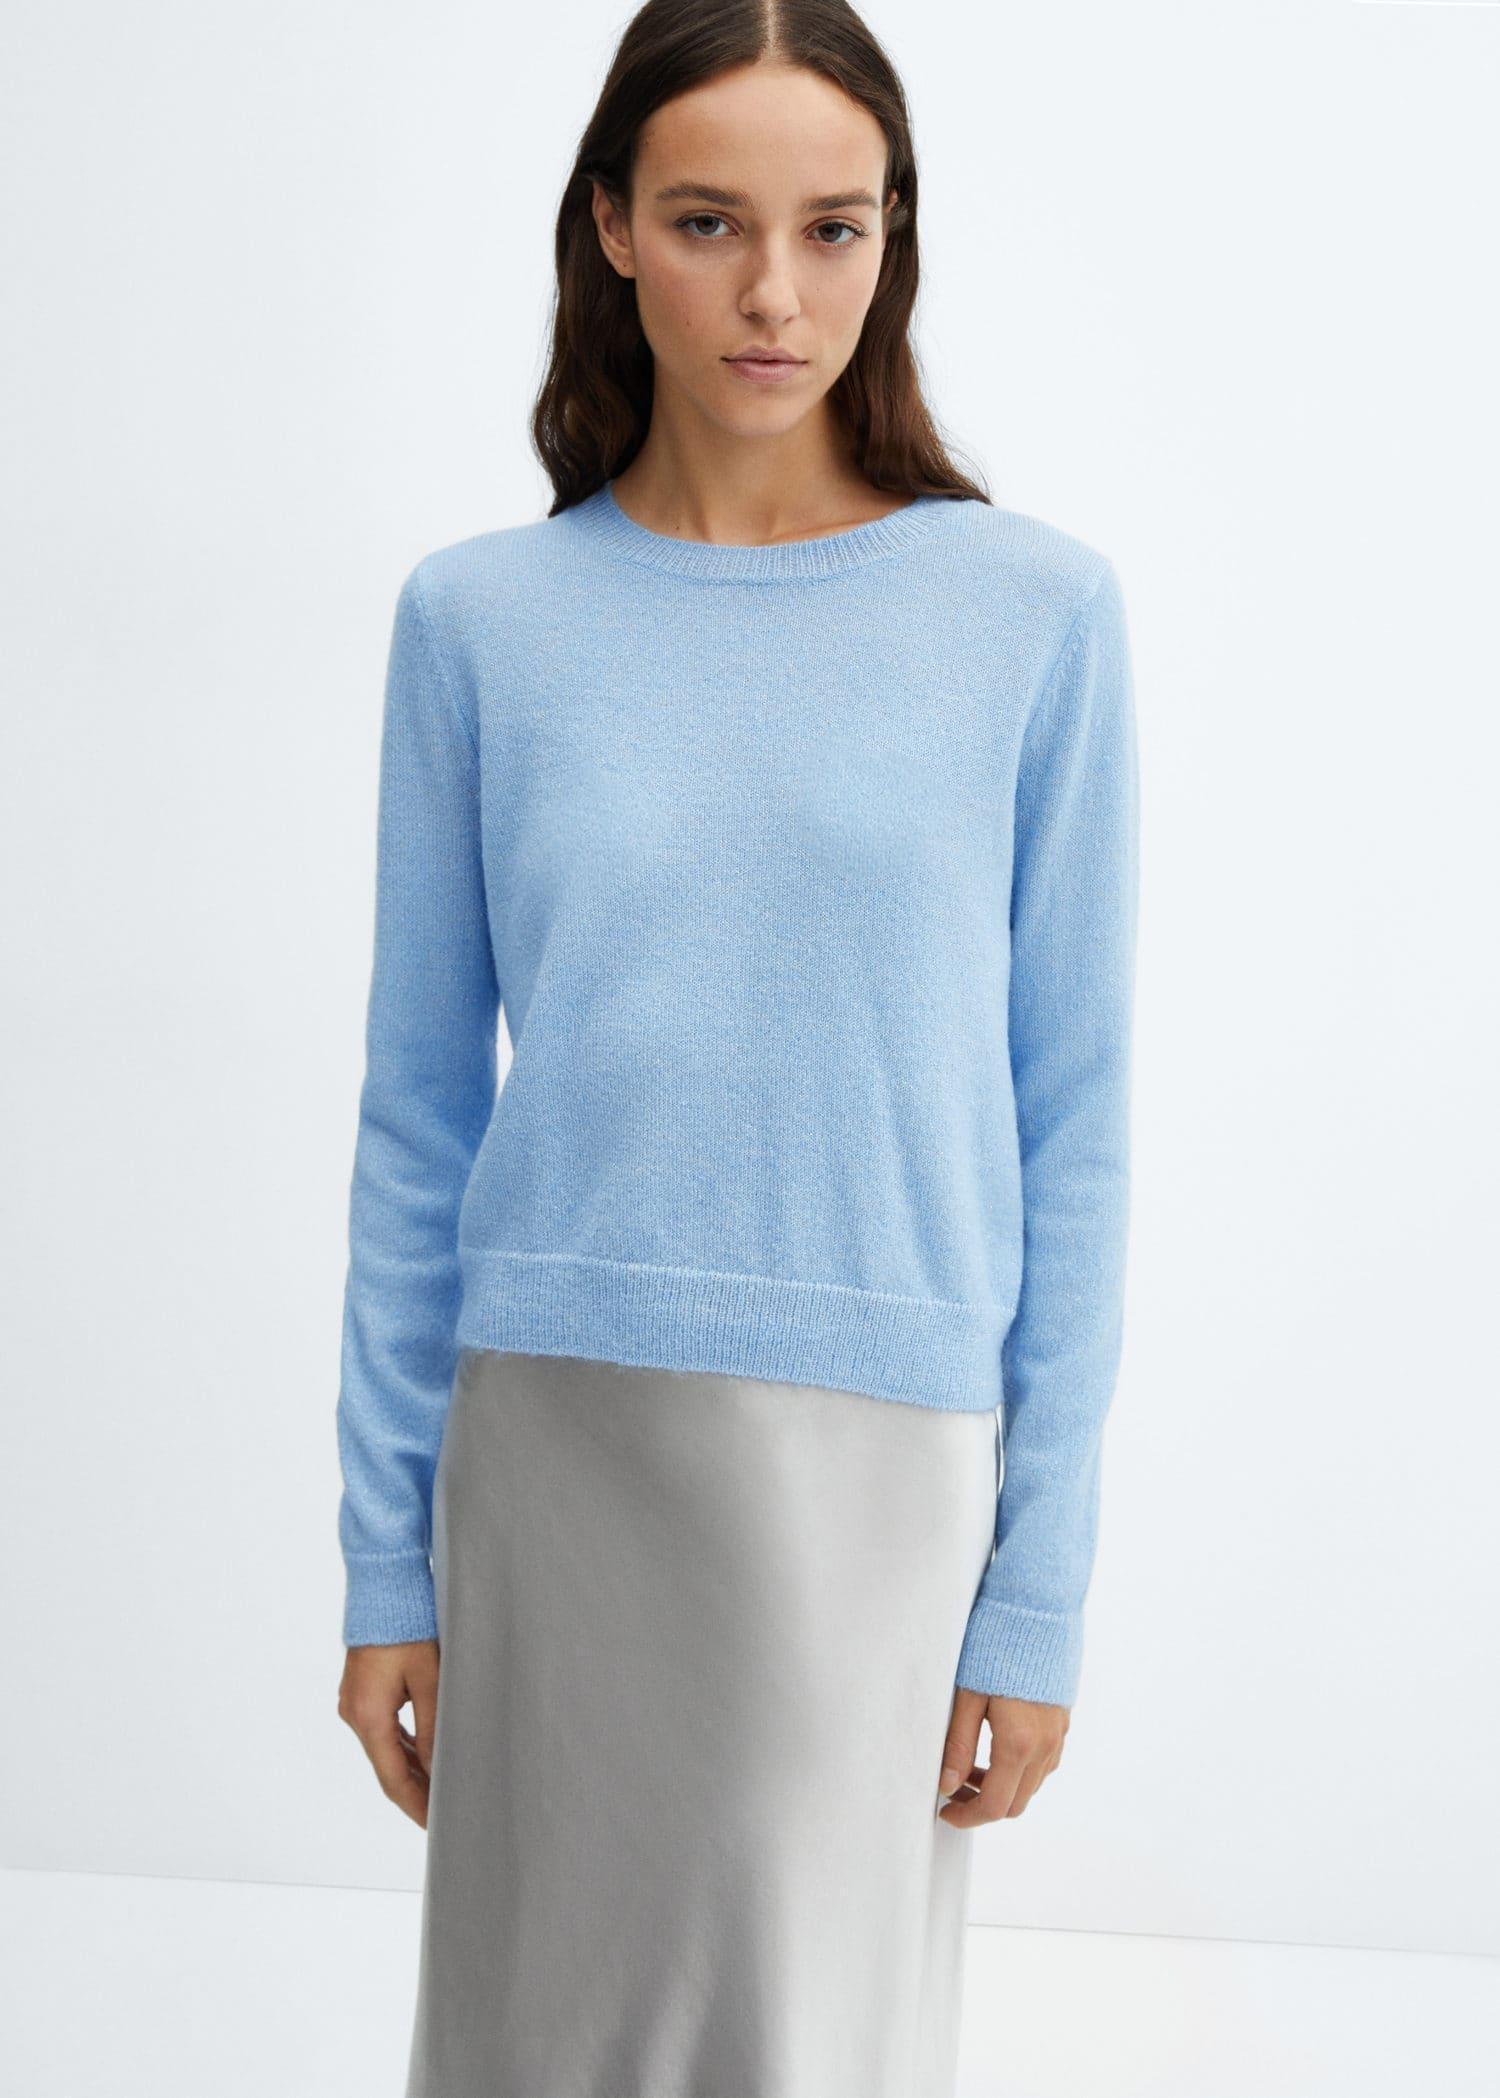 Mango - Blue Knitted Sweater